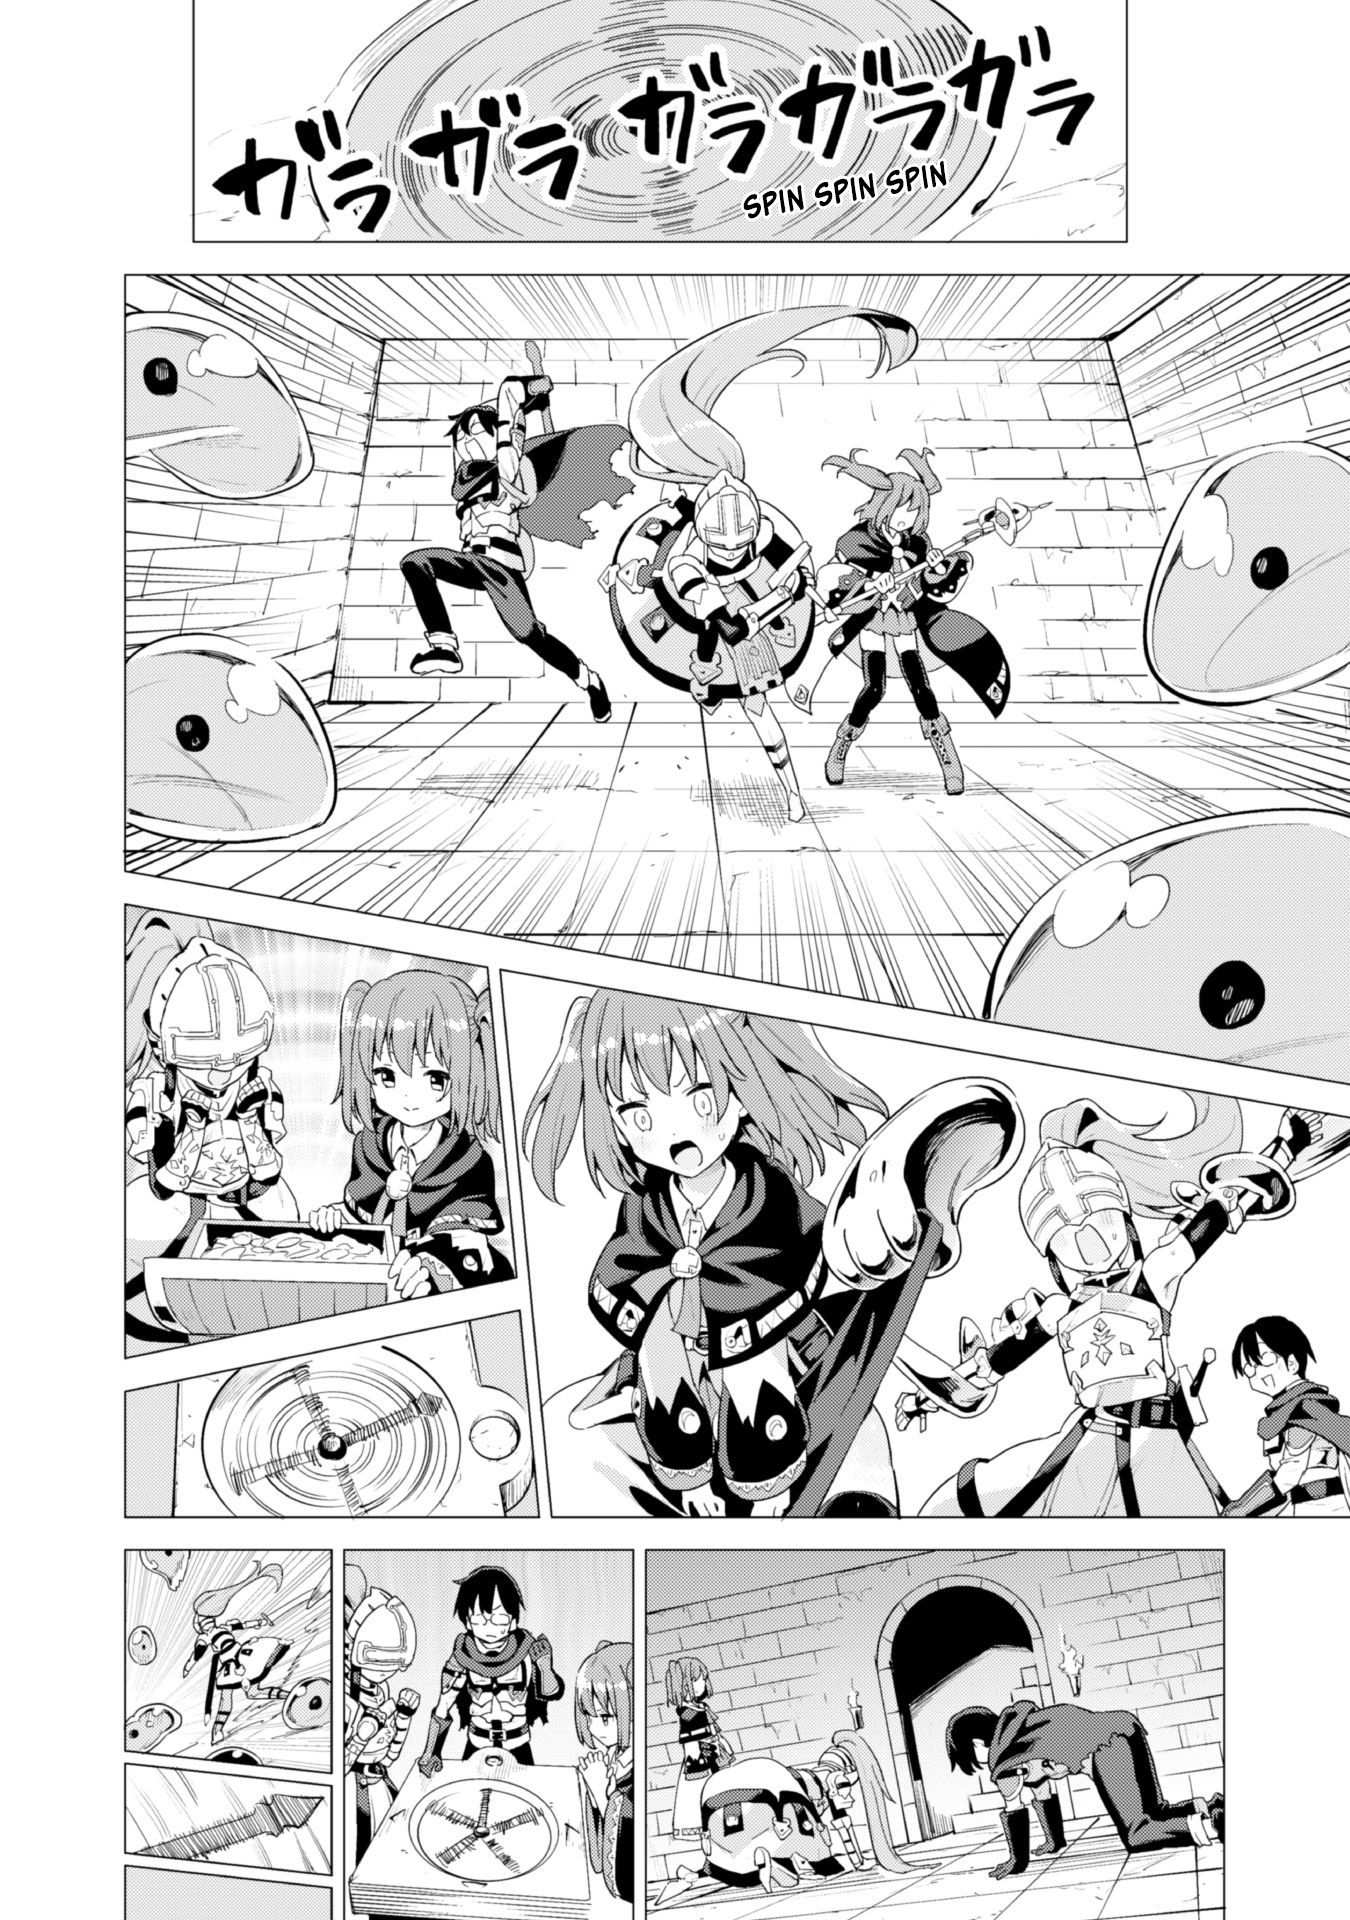 Otadesu Updates - Confira a capa do volume 16 do mangá Fukigen na